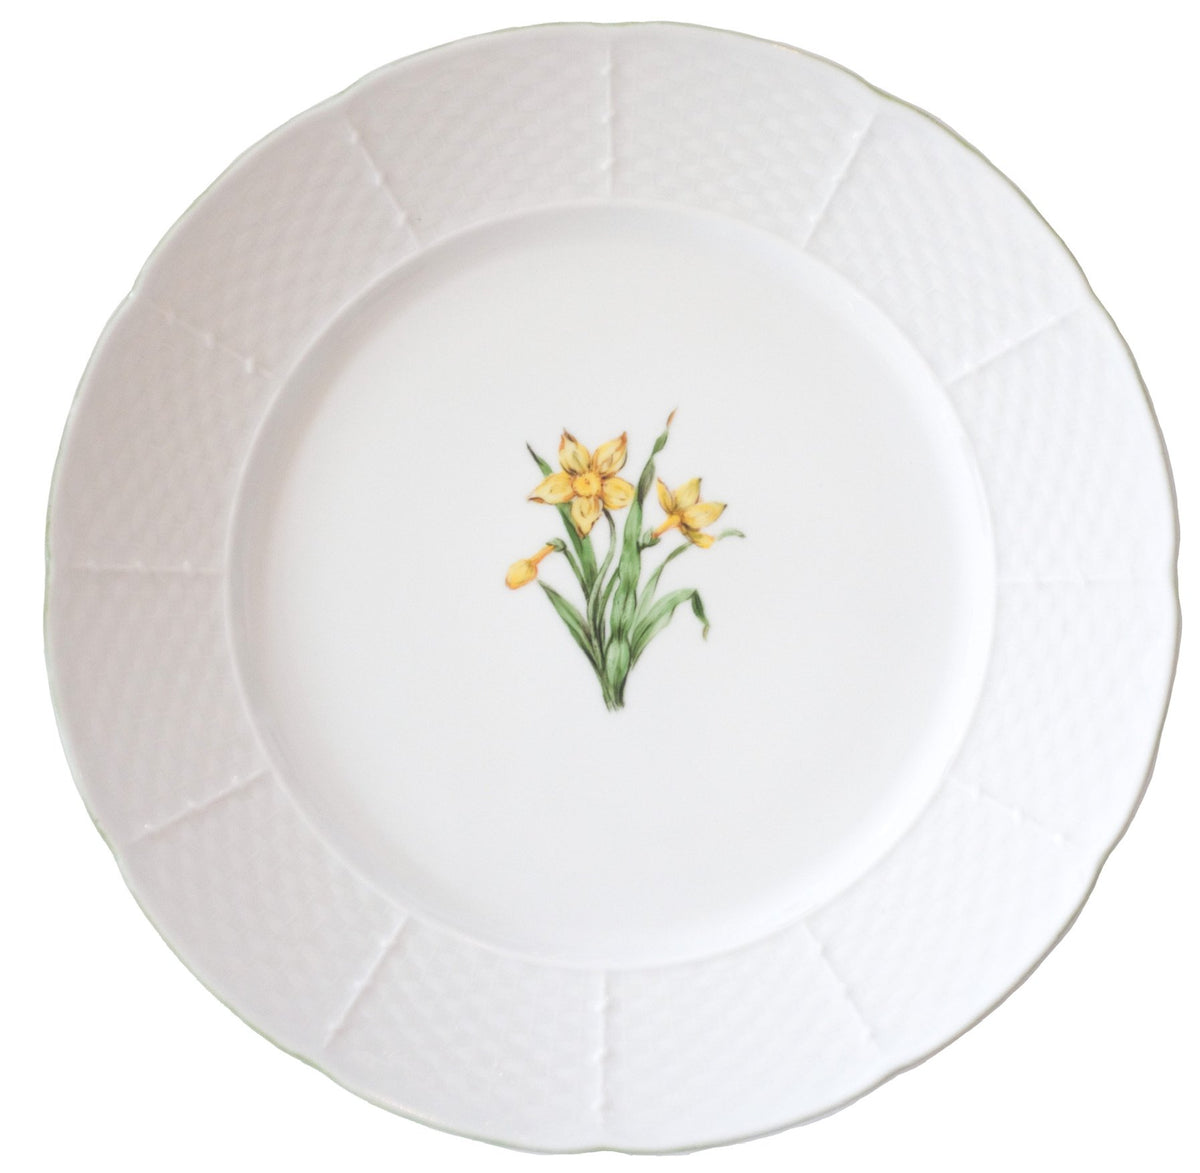 Basket Weave Dinner Plate in Daffodils